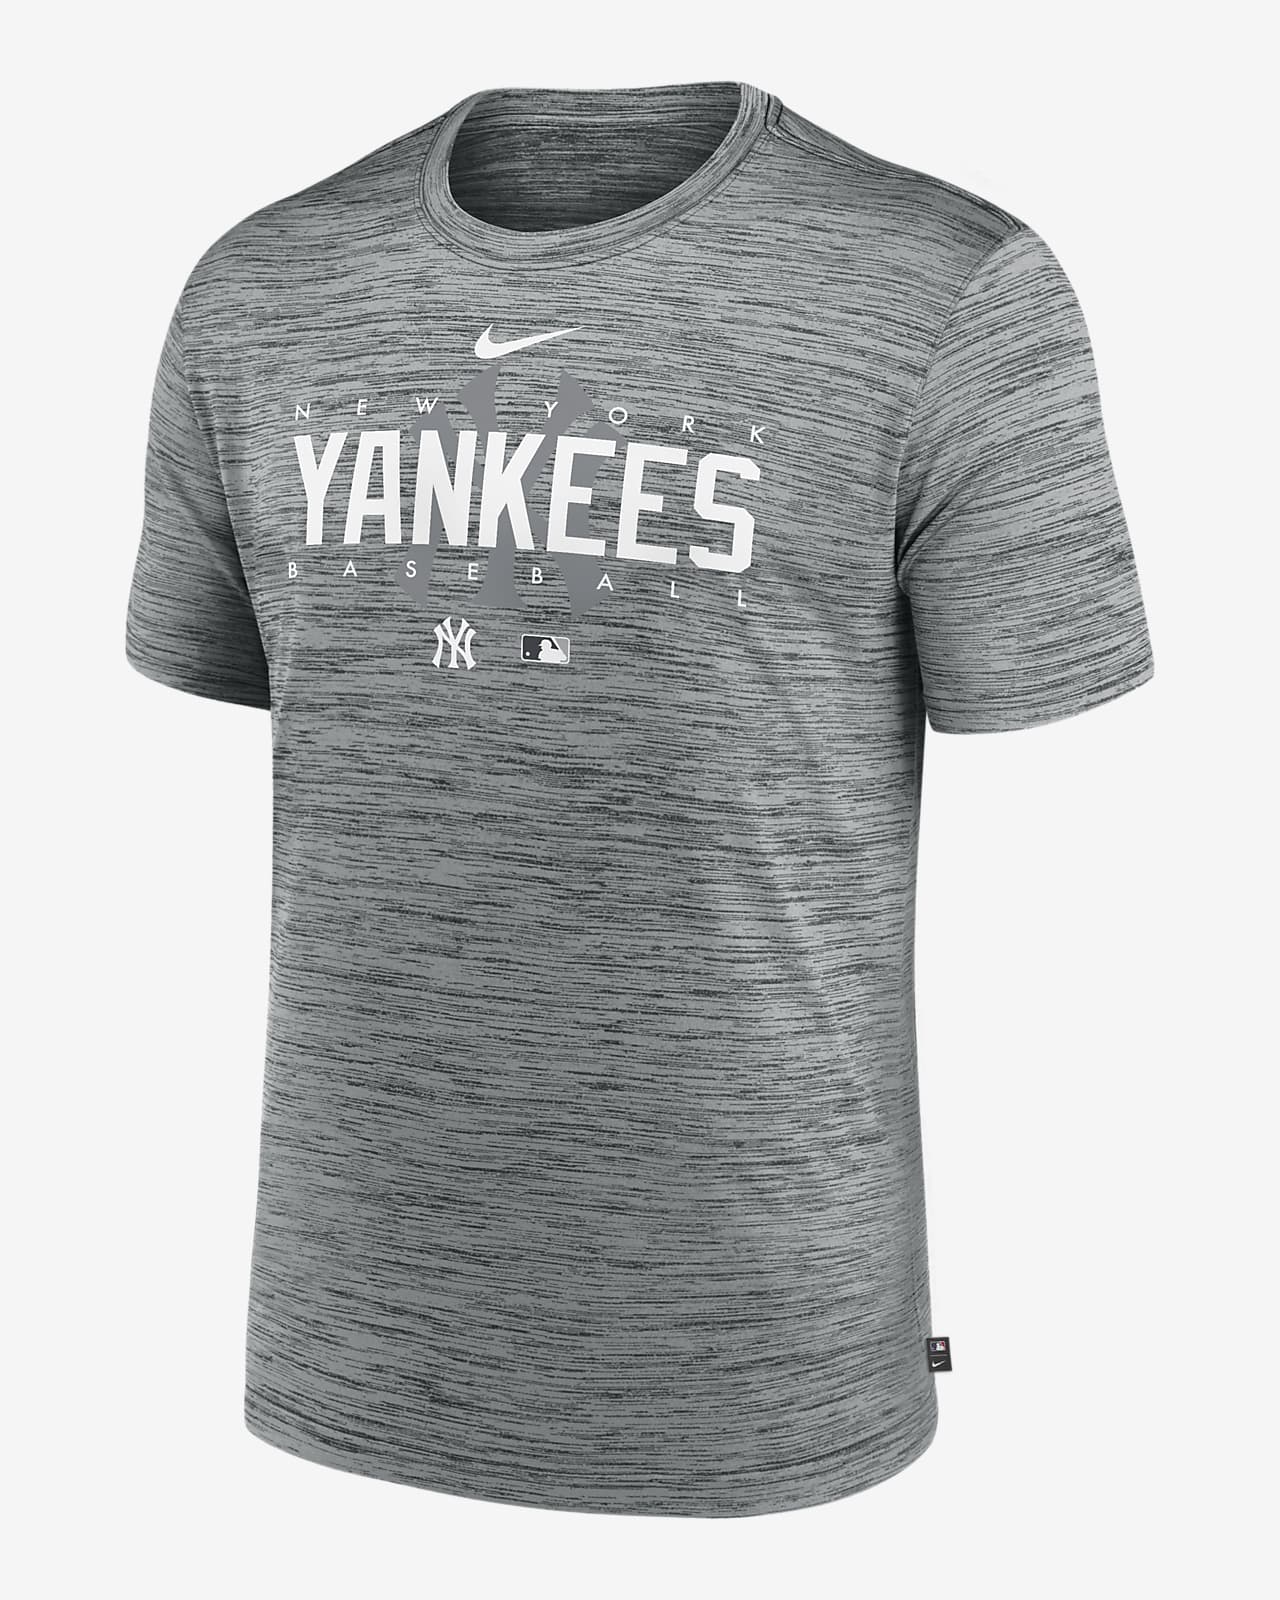 Camiseta Nike Authentic Collection DRI-FIT Velocity de los New York Yankees  - Hombre